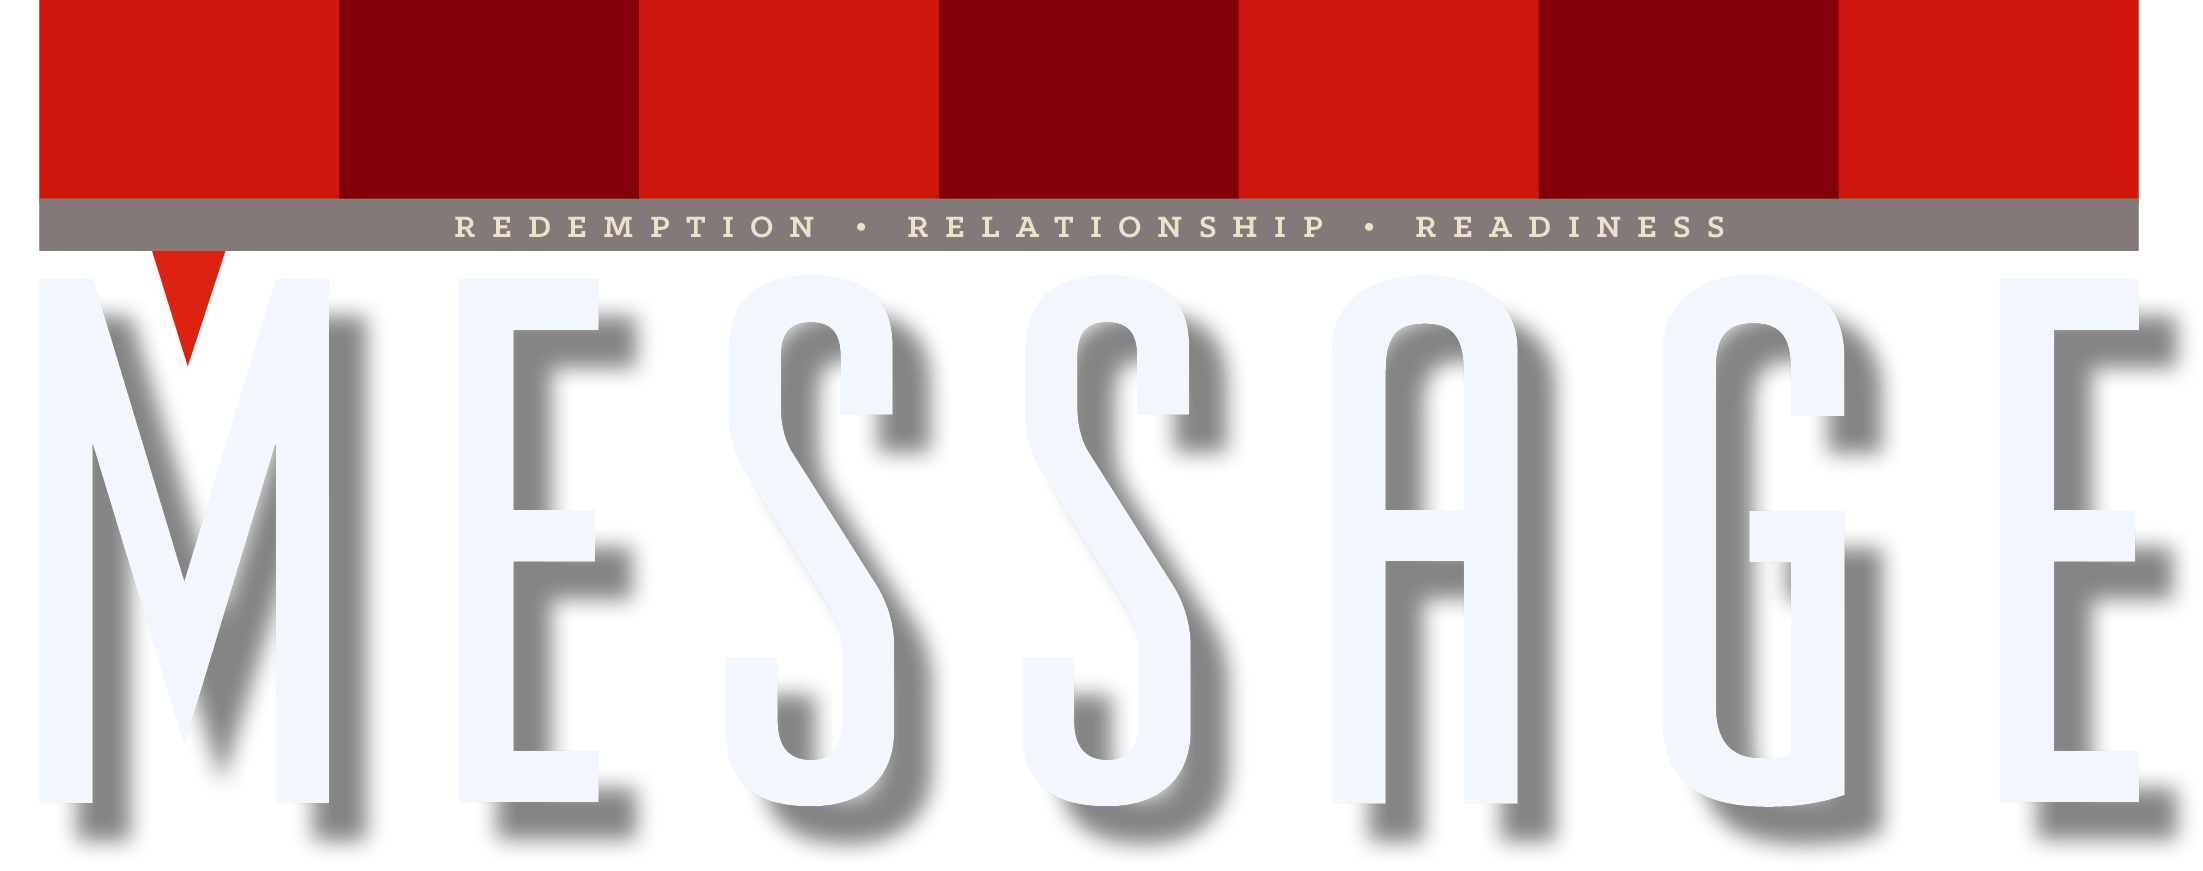 Message Magazine logo